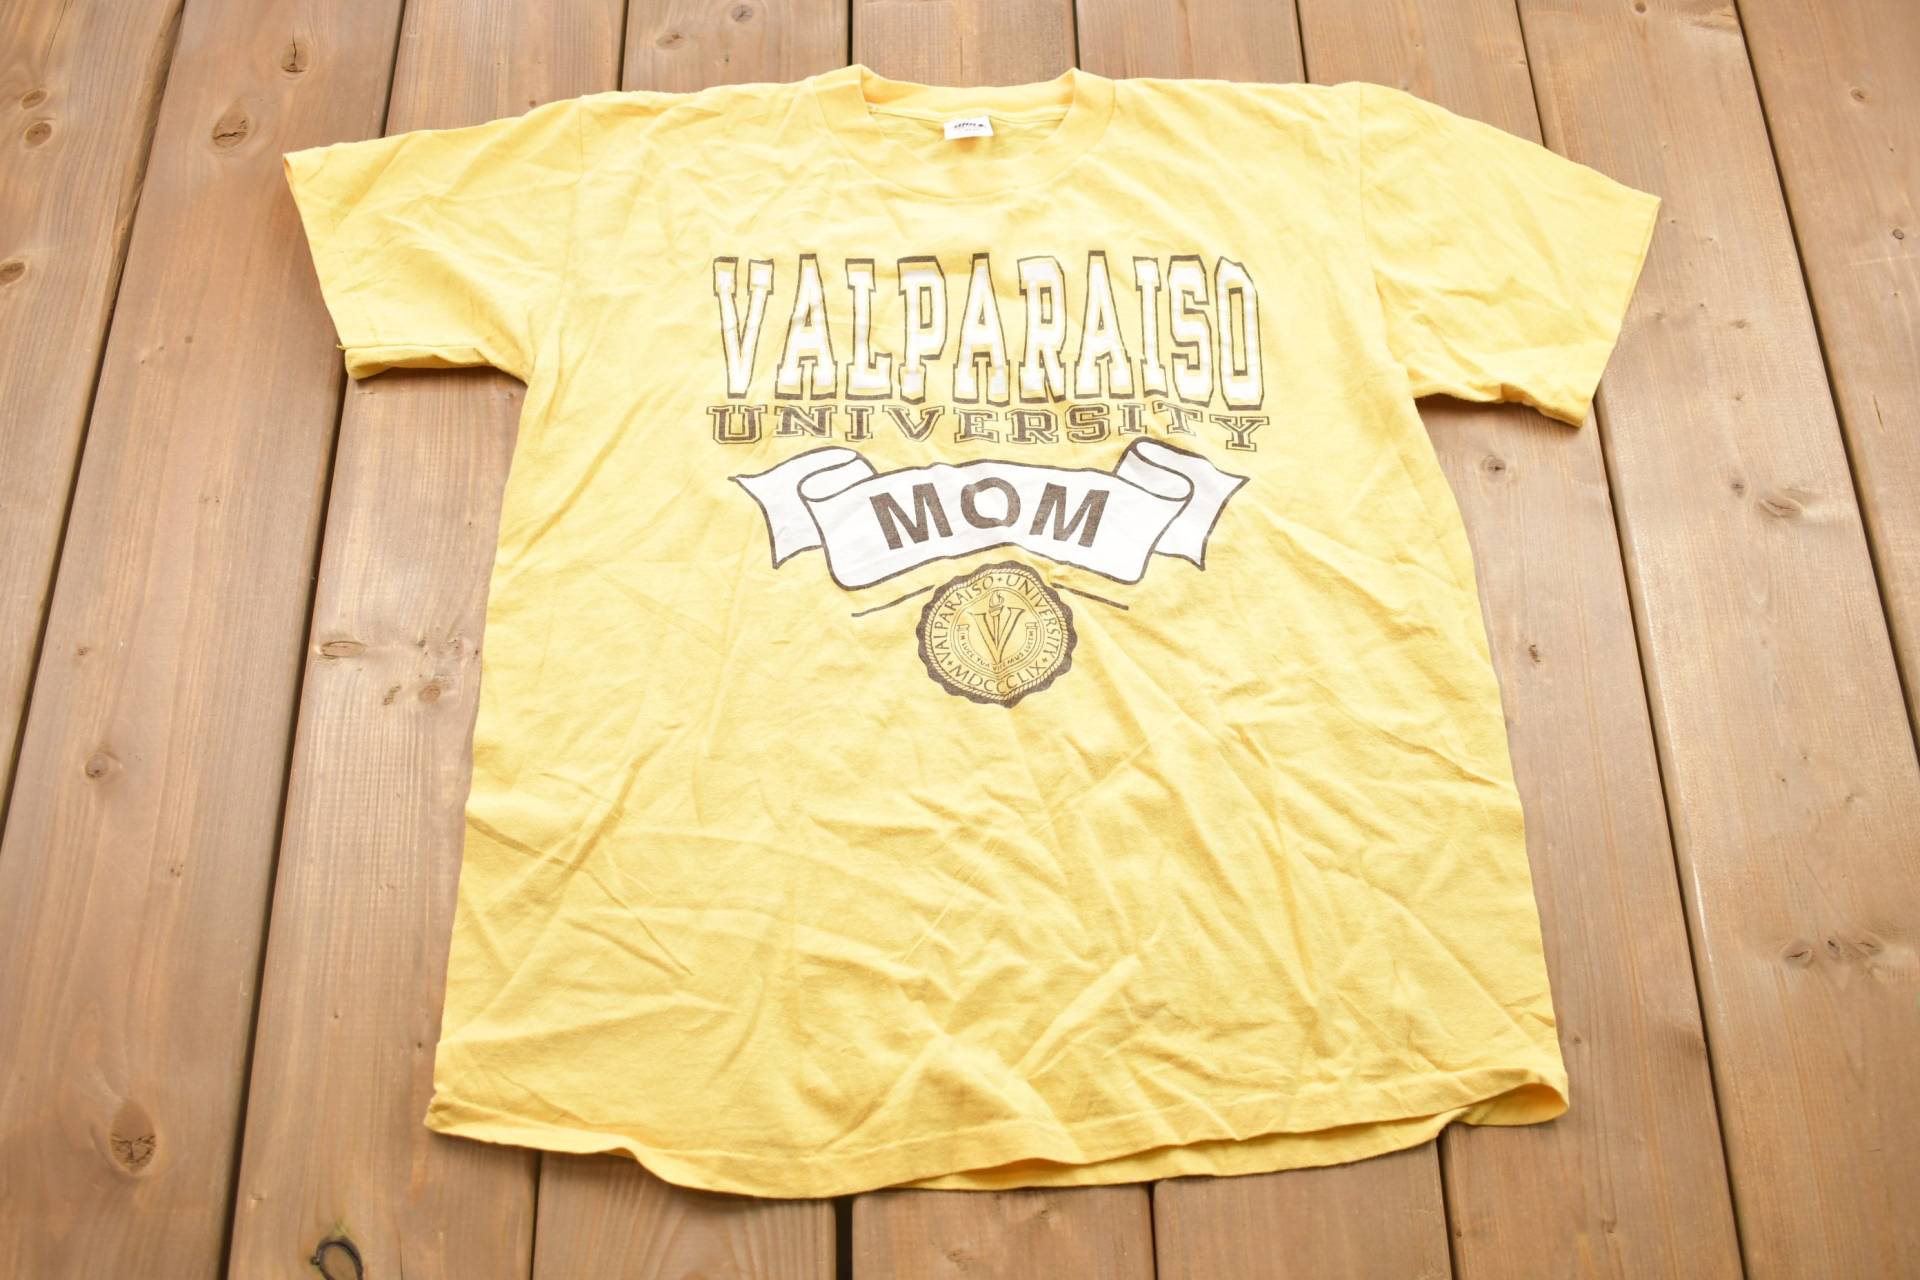 Vintage 1990Er Jahre Valparaiso University Collegiate Mom T-Shirt/Made in Usa Ncaa Americana Sportbekleidung von Lostboysvintage